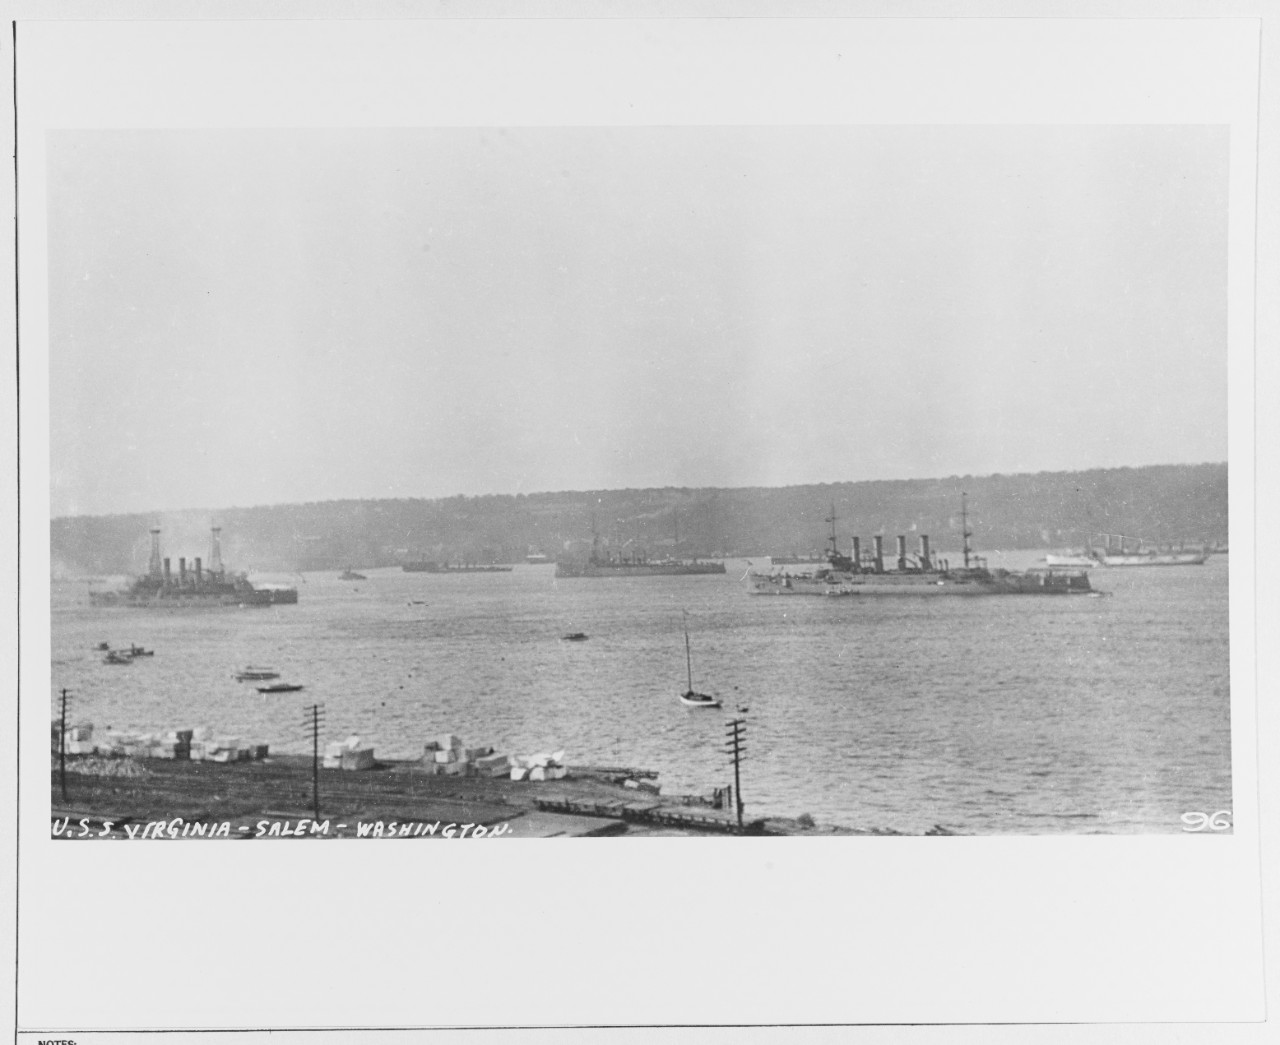 USS VIRGINIA, USS SALEM, and USS WASHINGTON